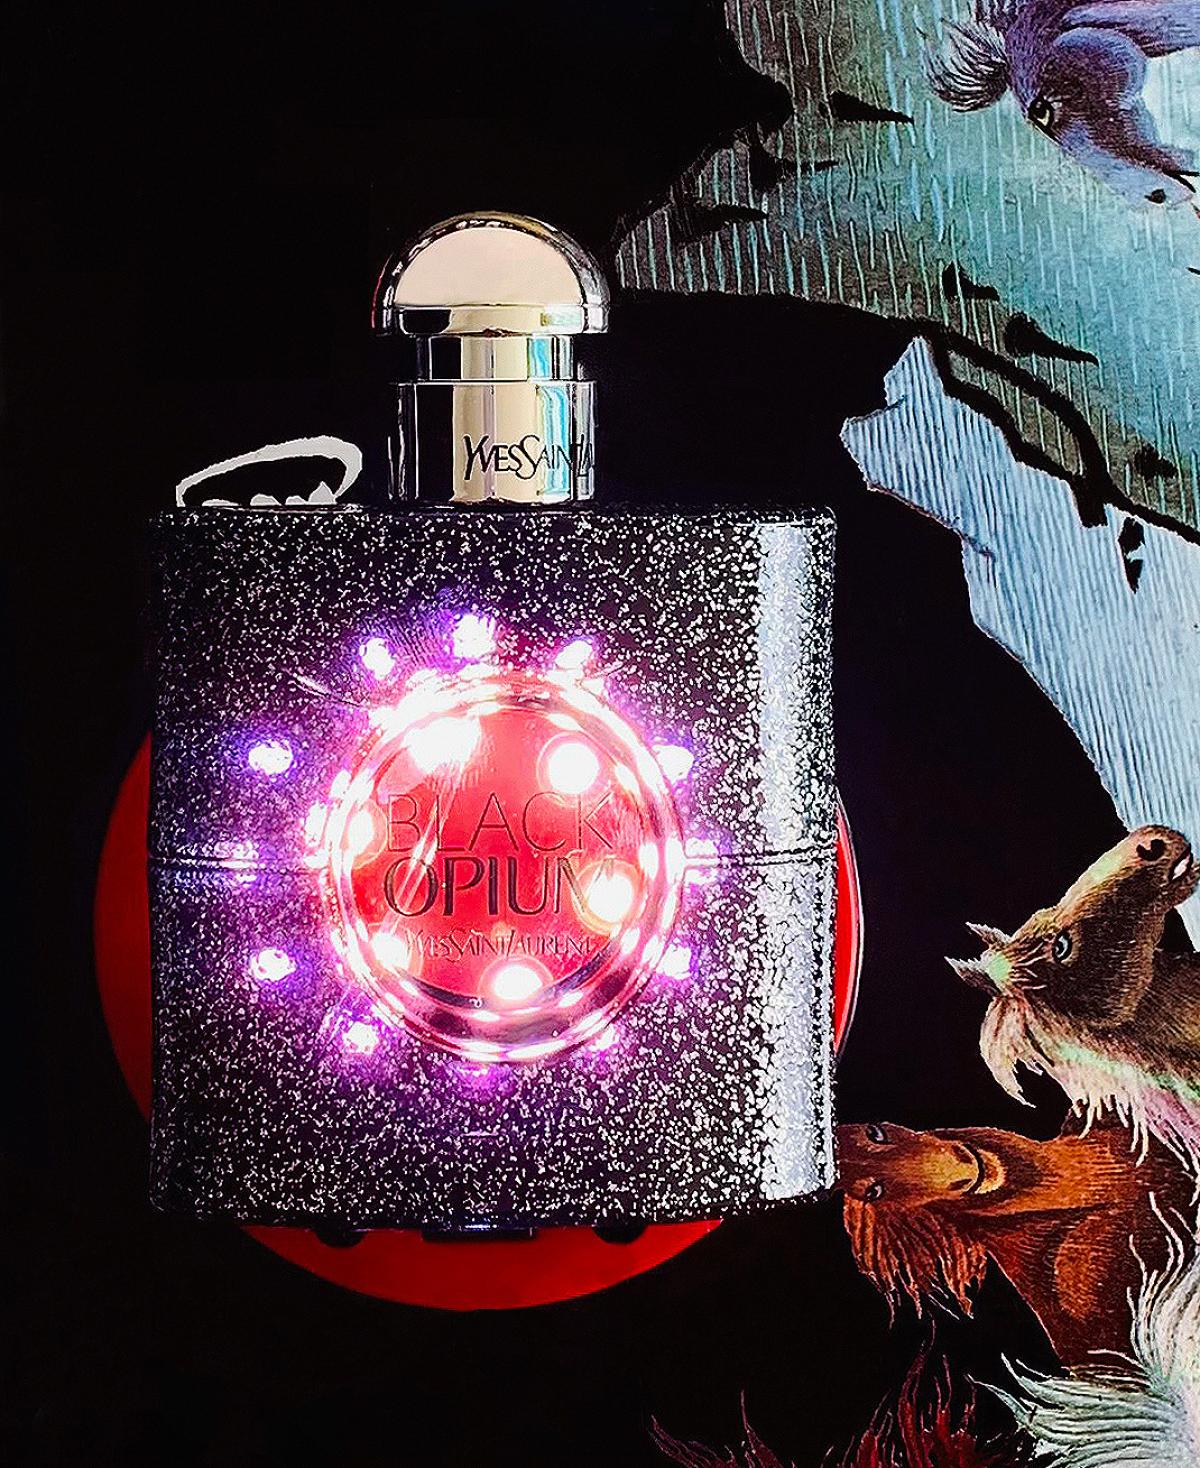 Black Opium Nuit Blanche Yves Saint Laurent perfume - a fragrance for